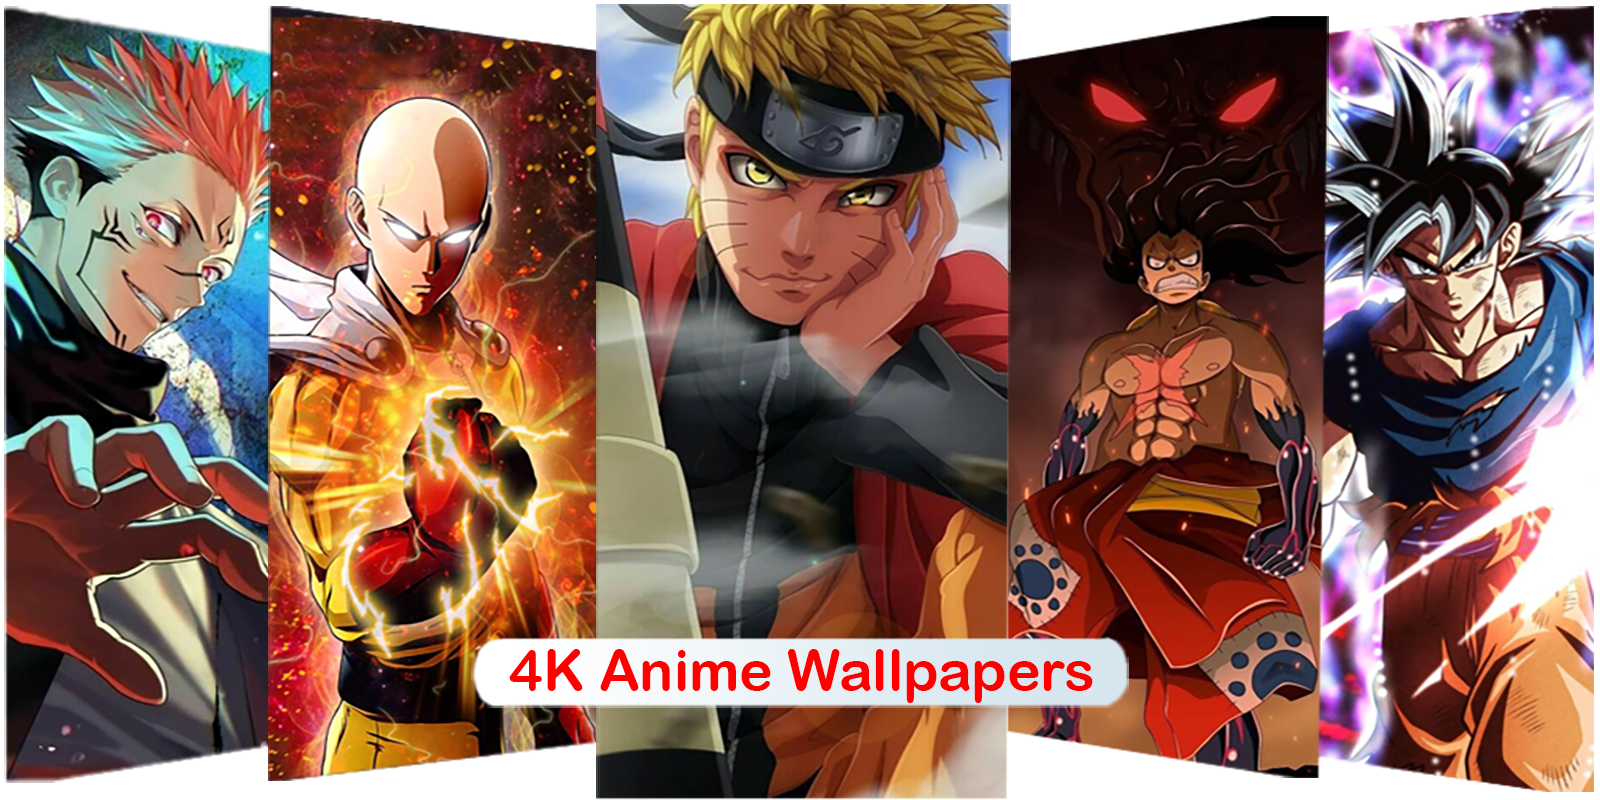 Download Black Anime Wallpapers  4k Dark Backgrounds hd Free for Android   Black Anime Wallpapers  4k Dark Backgrounds hd APK Download   STEPrimocom